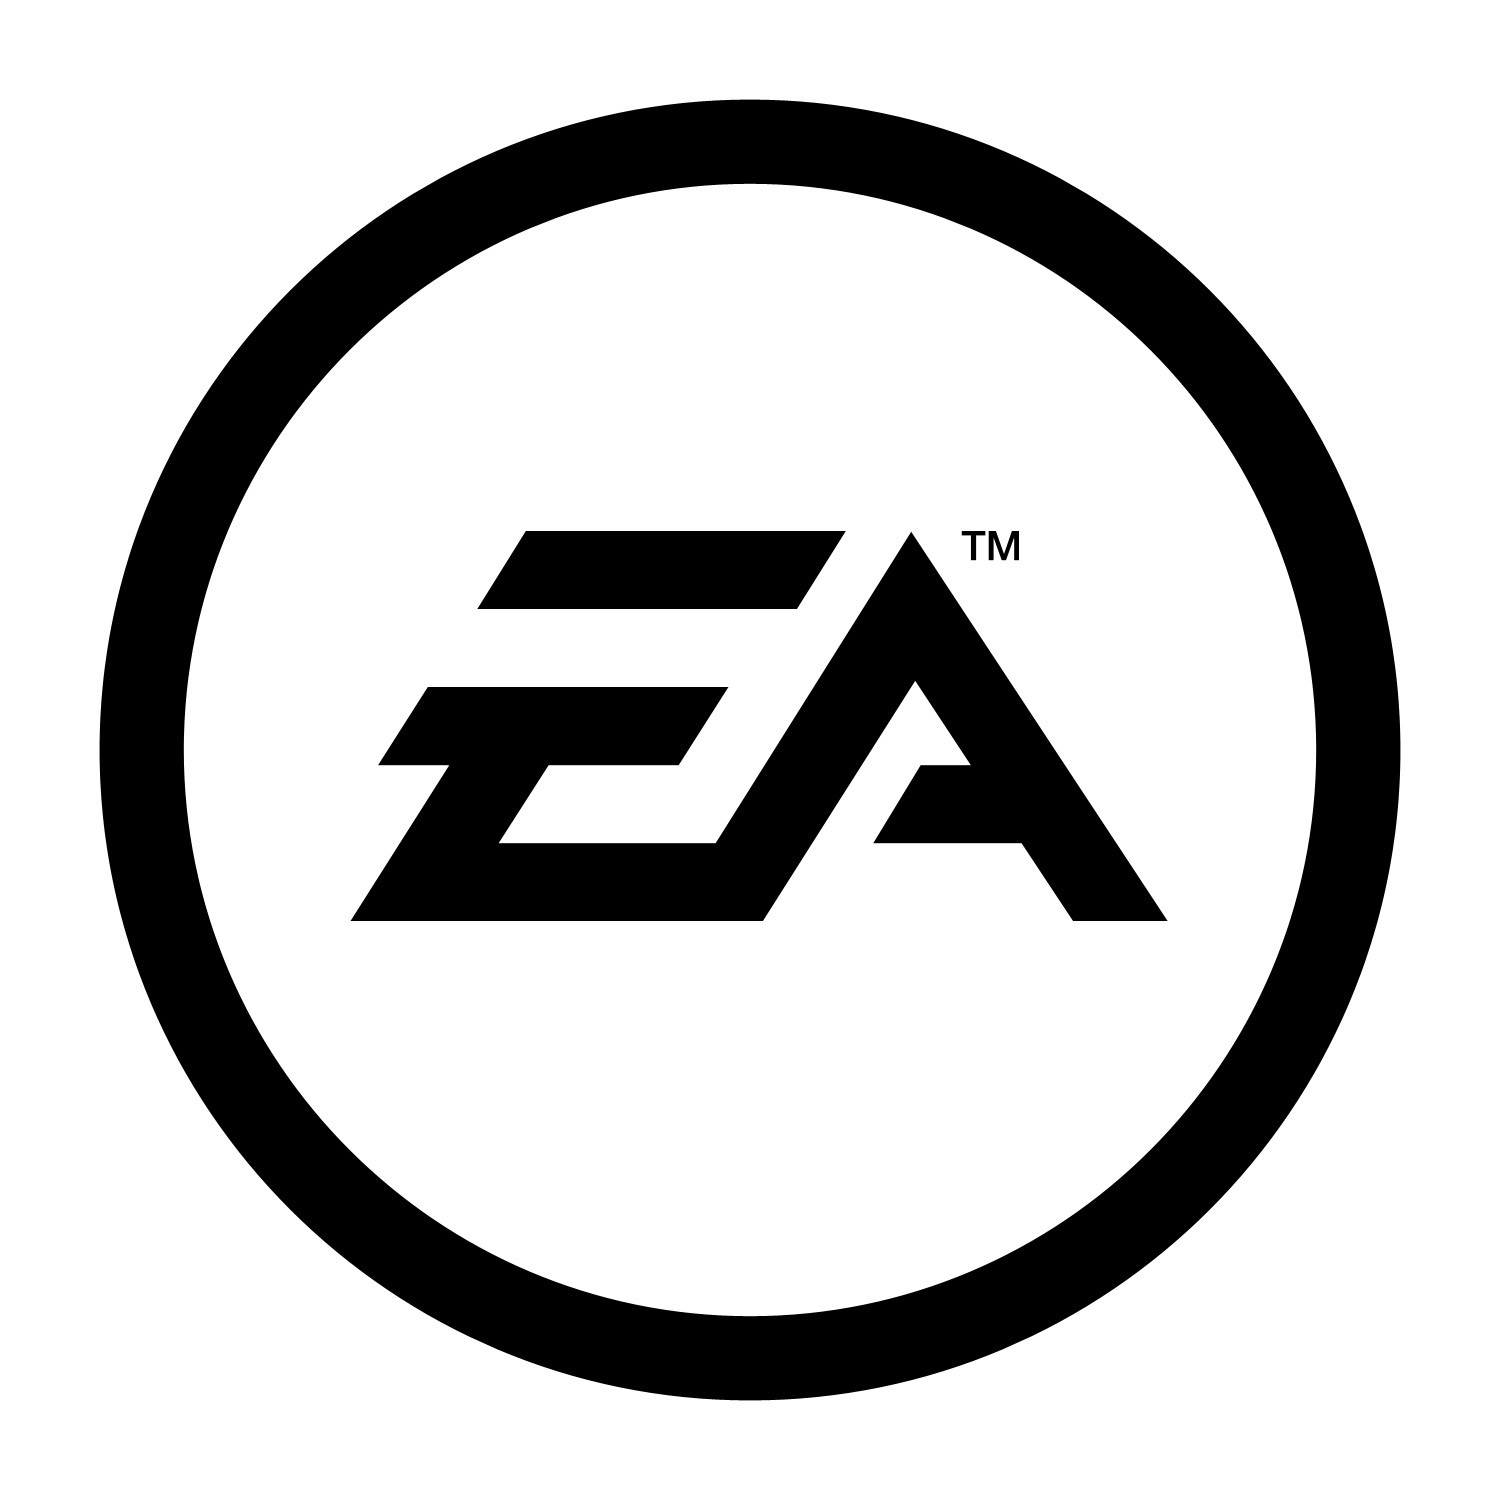 EA Sports FC: Electronic Arts apresenta a logo do jogo e os